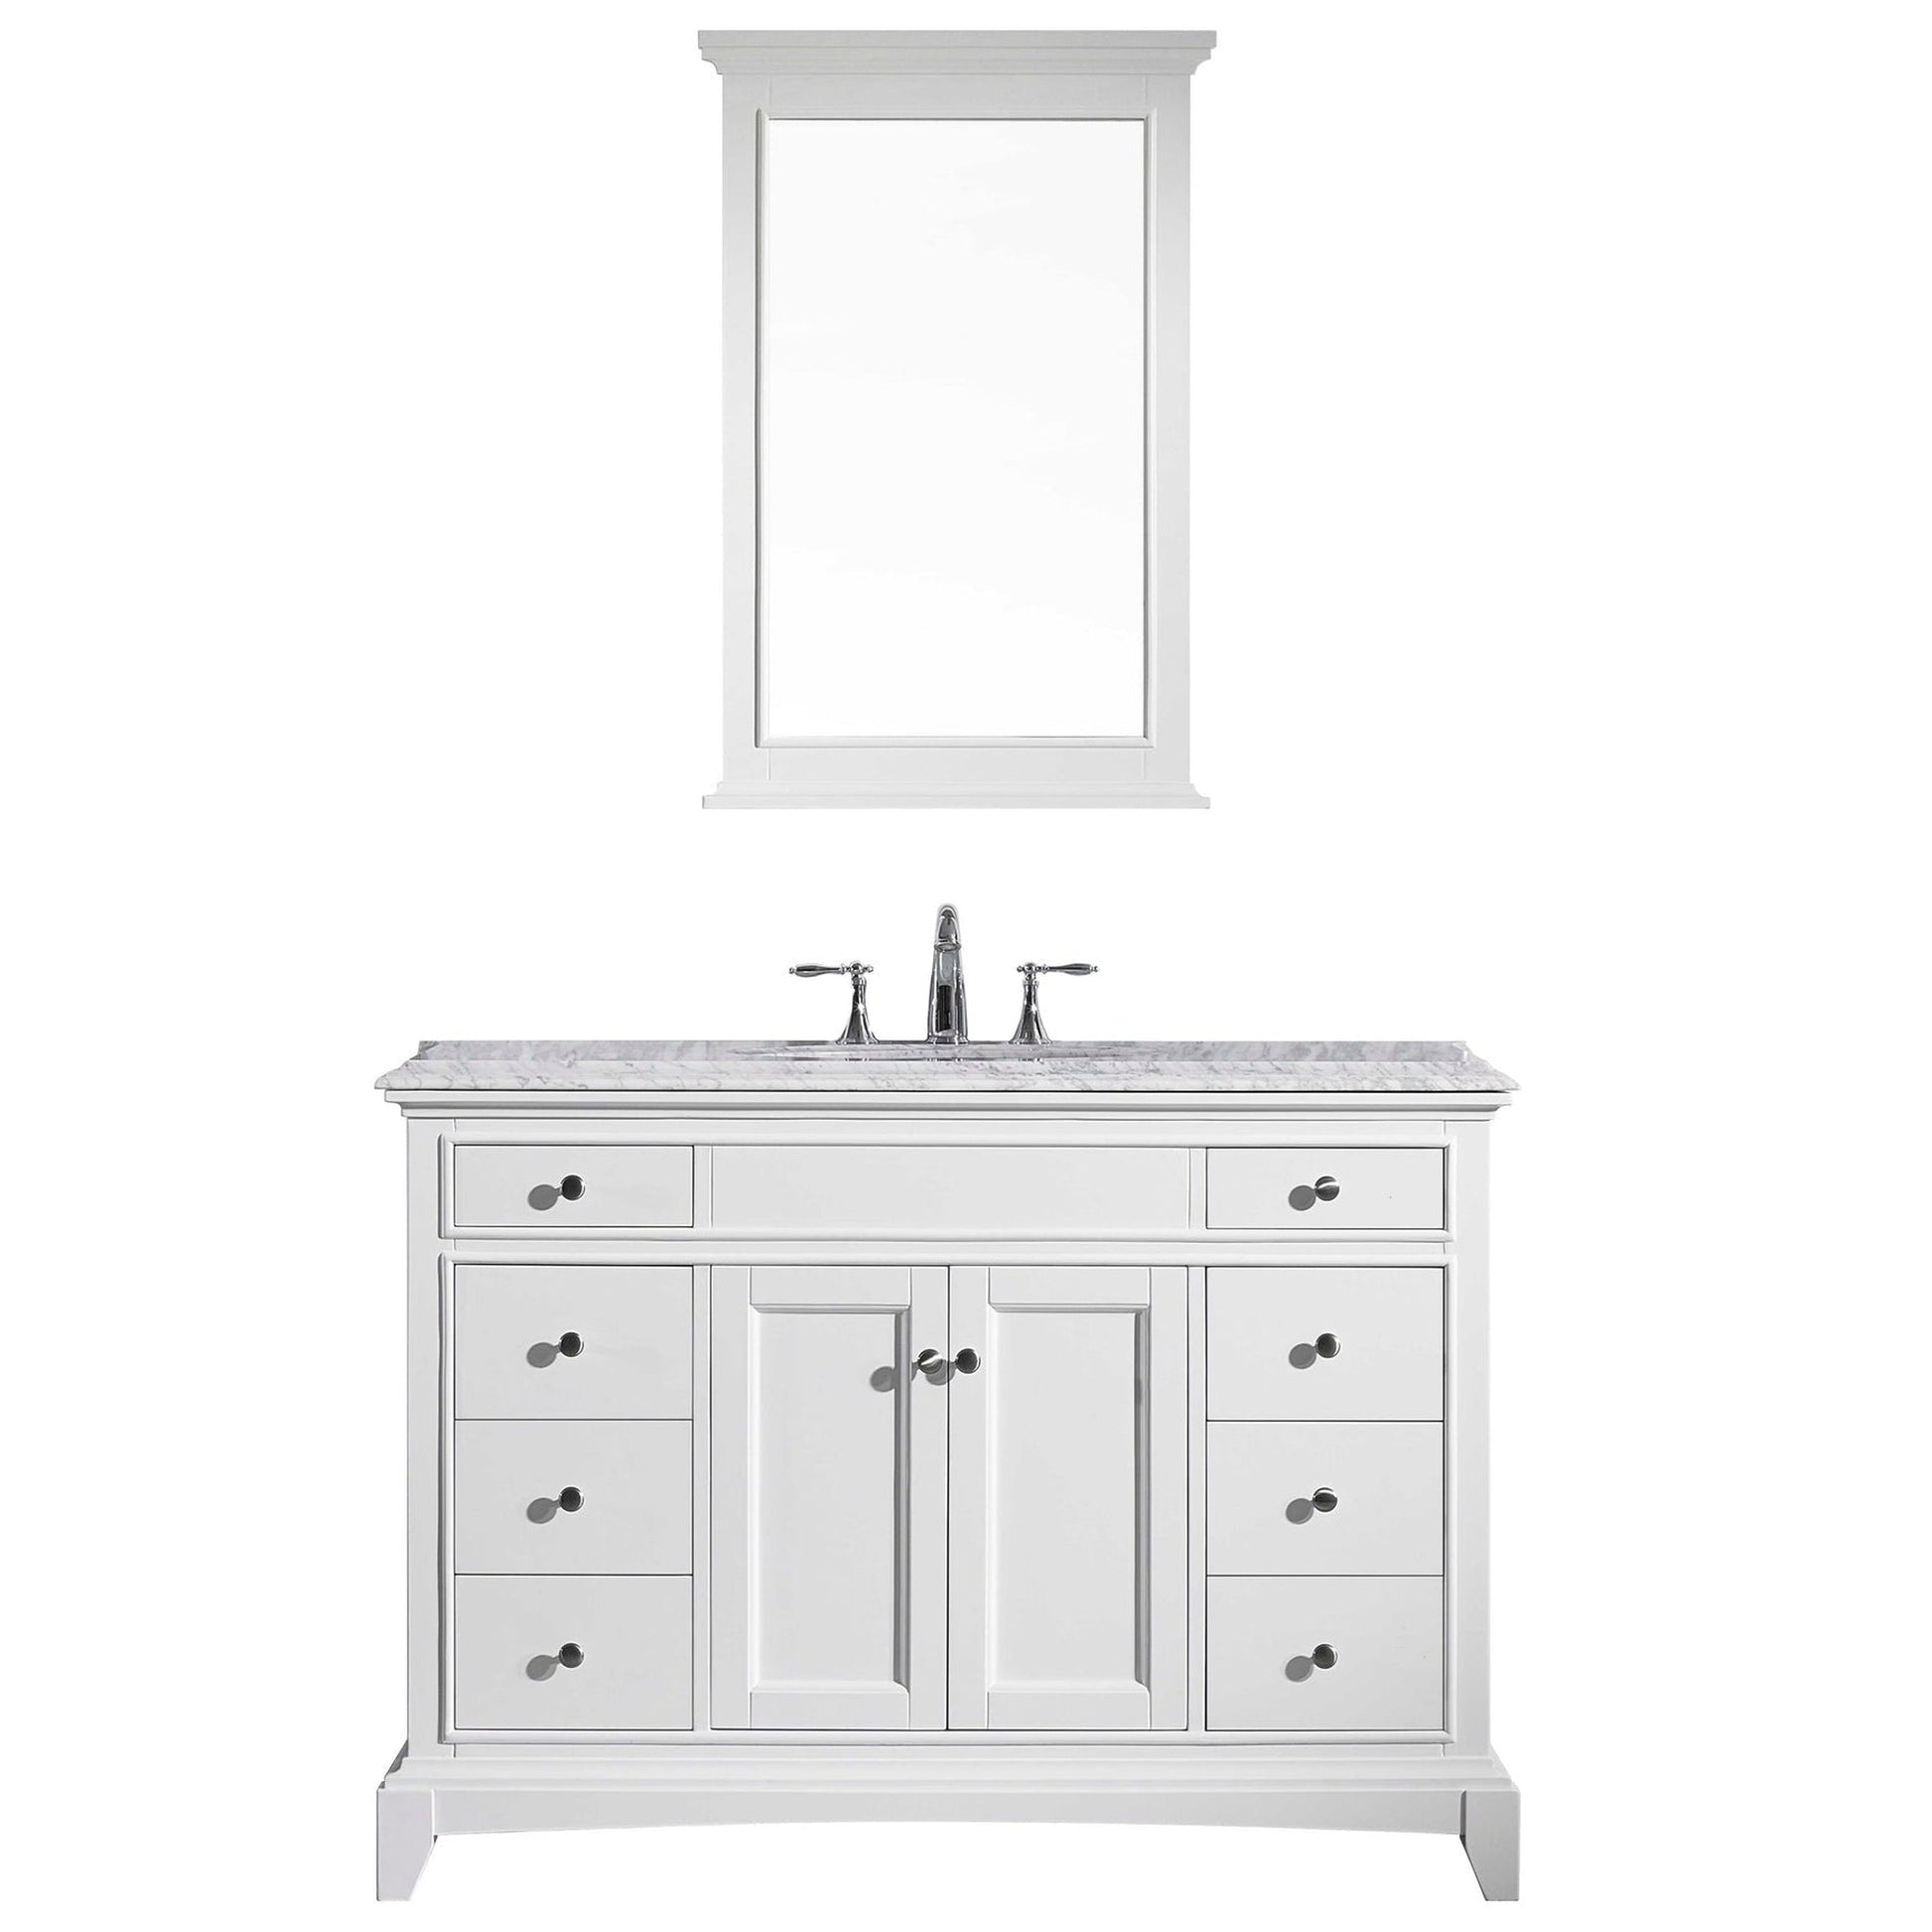 Eviva Elite Stamford 42" x 36" Freestanding White Bathroom Vanity With White Carrara Marble Countertop and Undermount Porcelain Sink